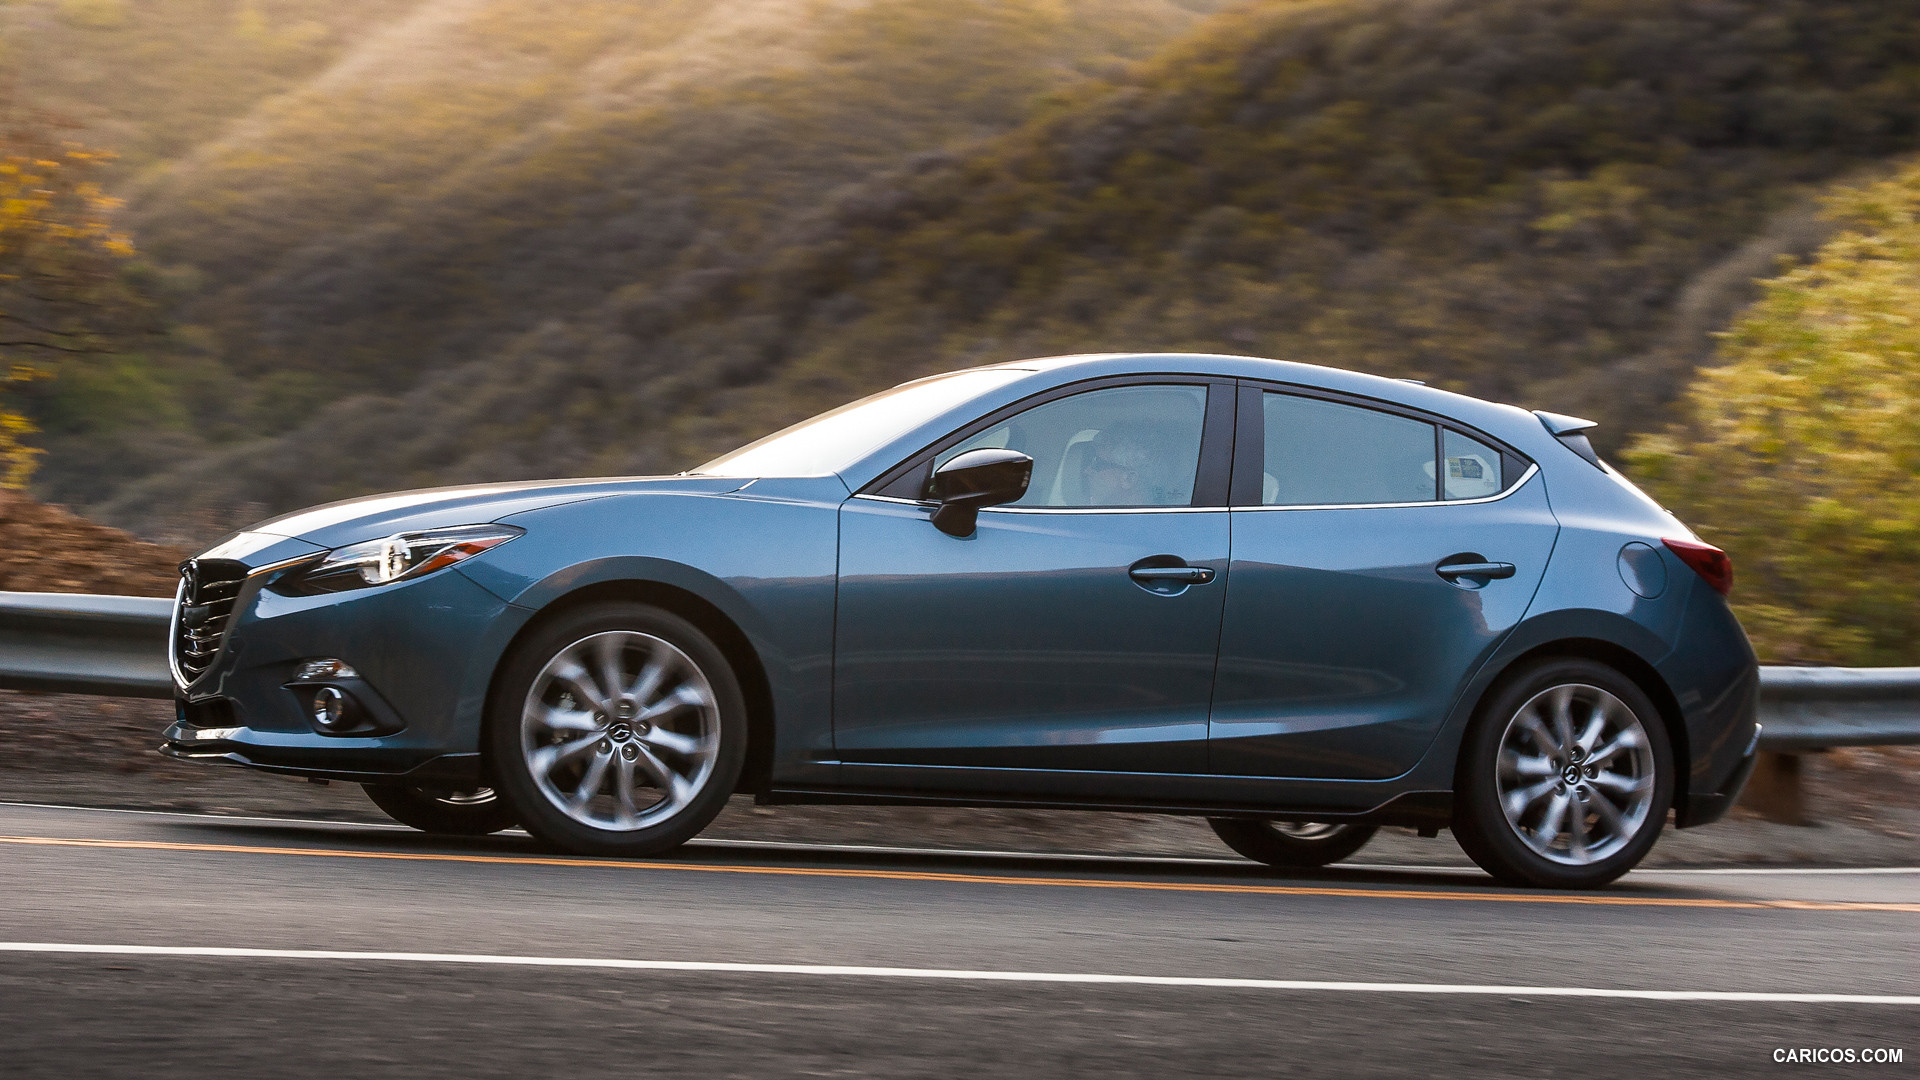 2015 Mazda 3 5D s Touring 6MT (Blue Reflex)  - Side, #10 of 27